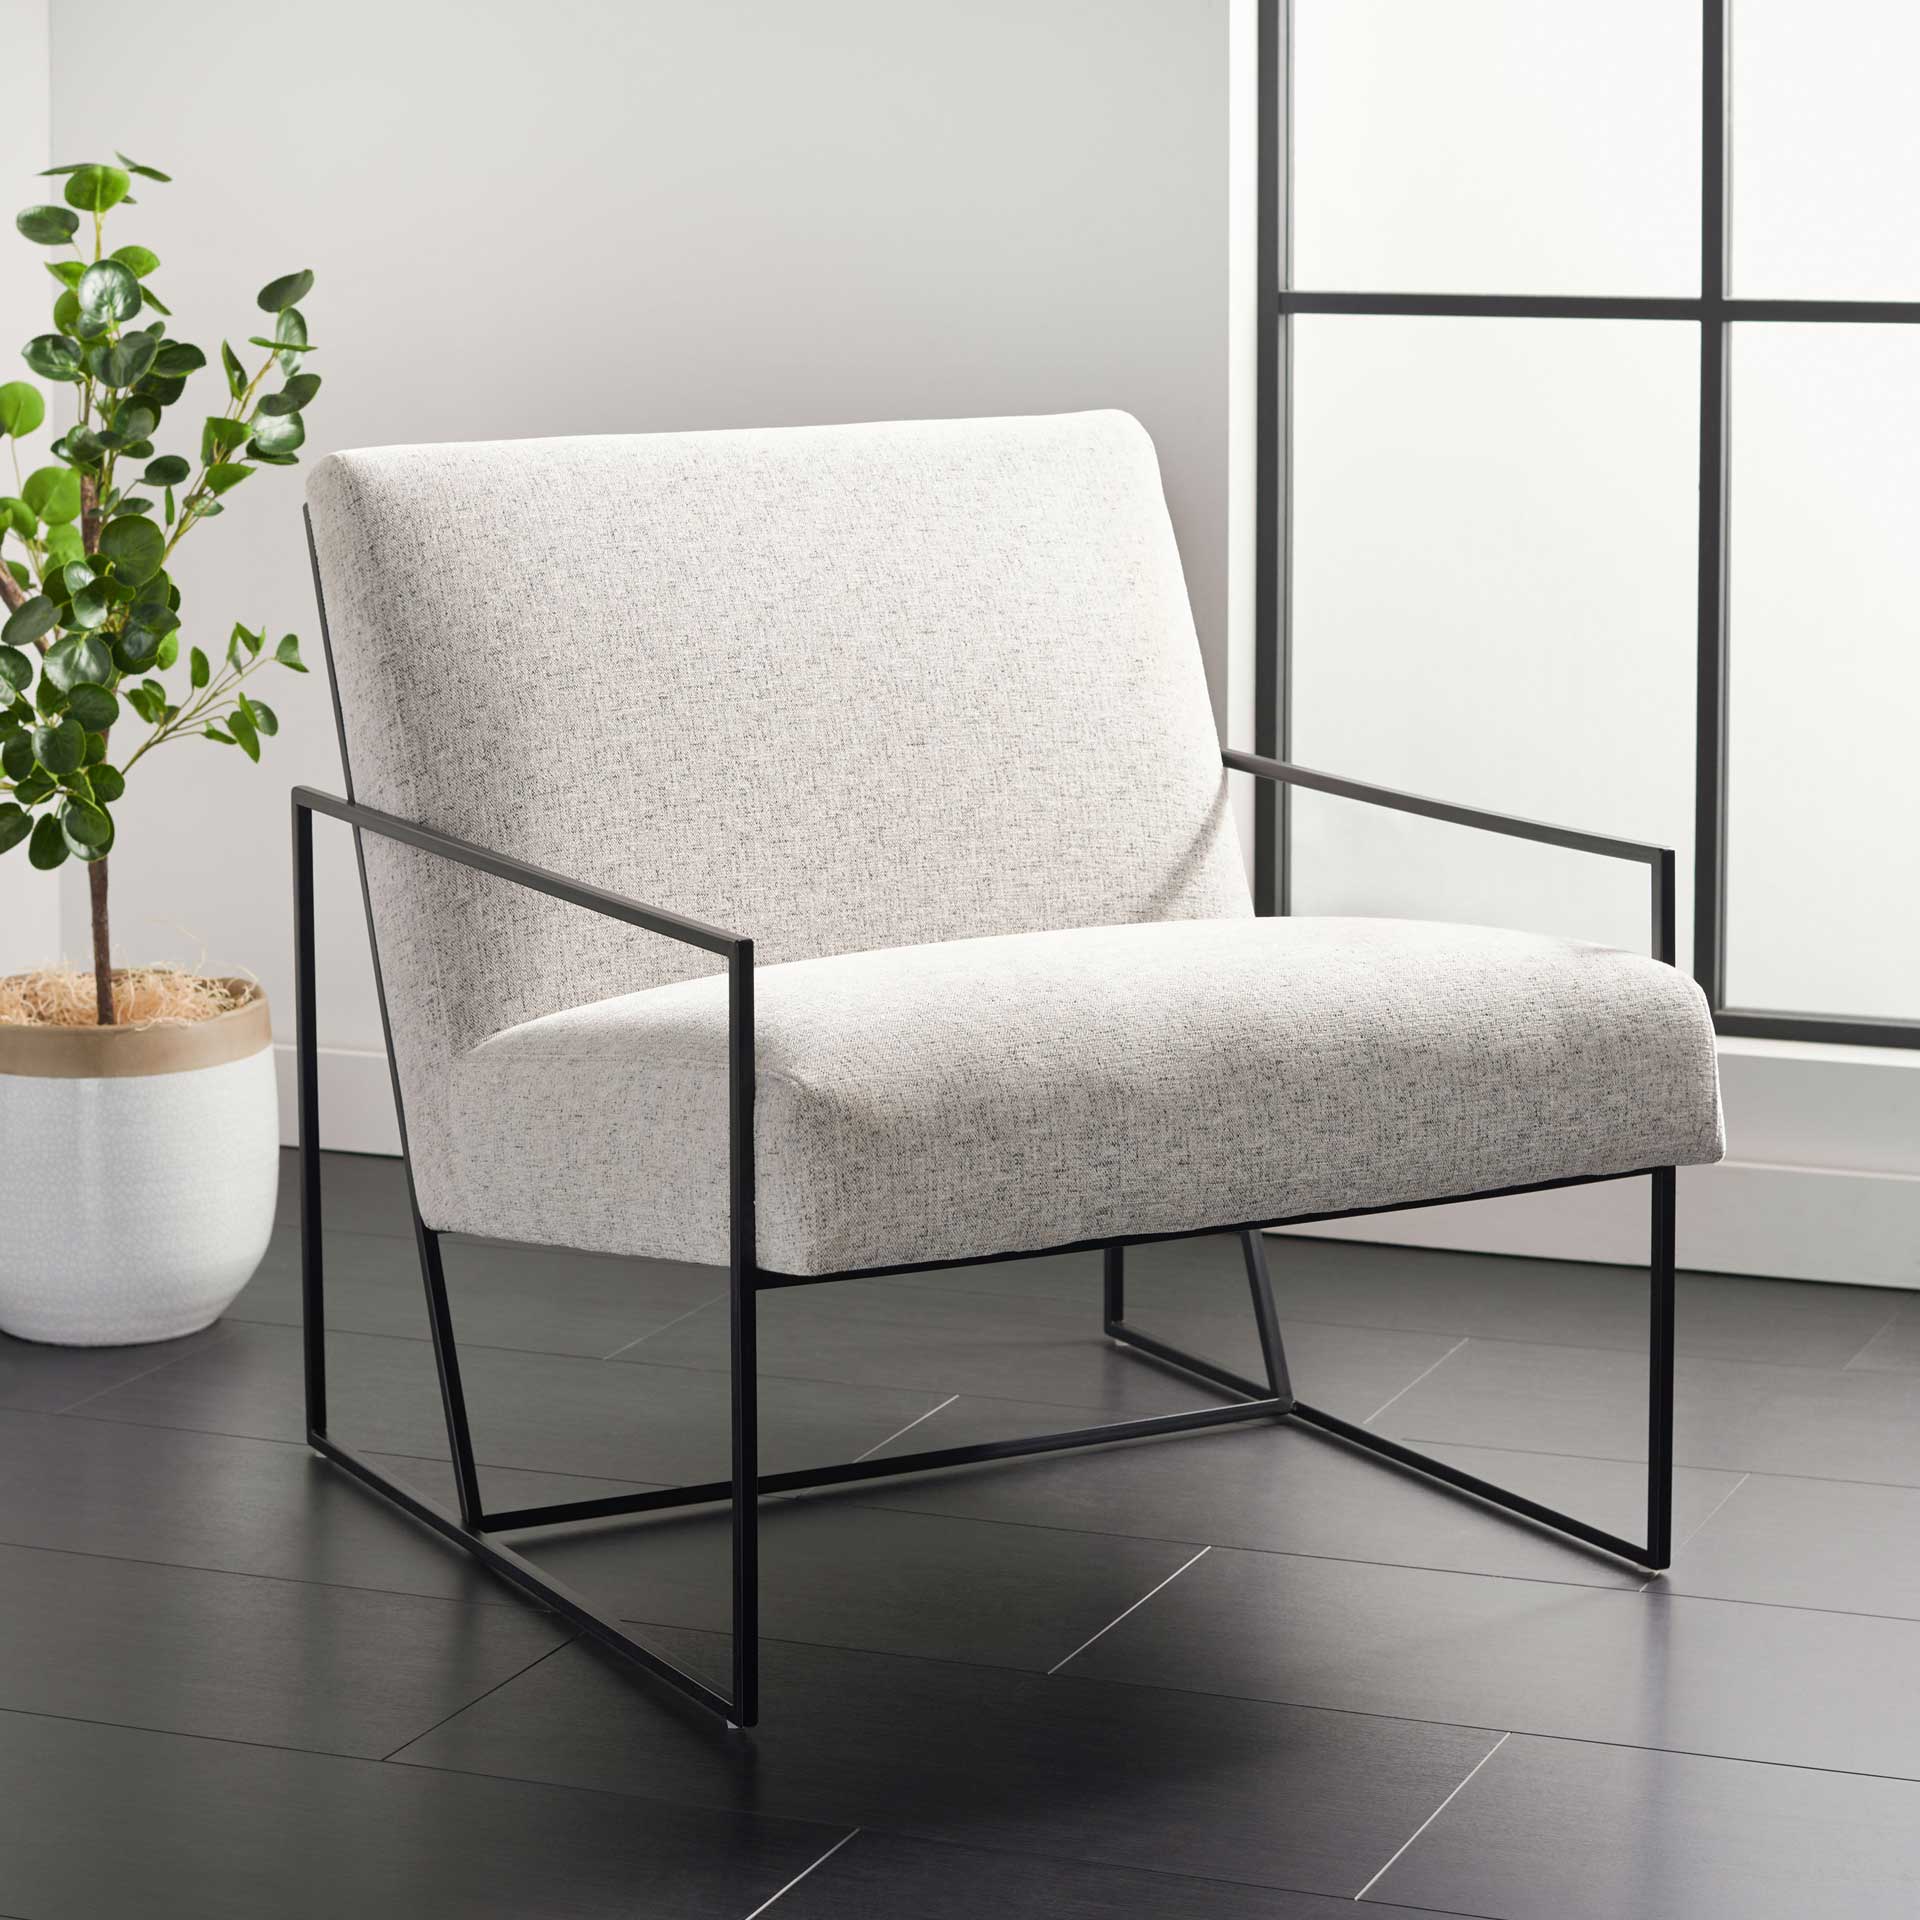 Atka Arm Chair Light Gray/Black Legs